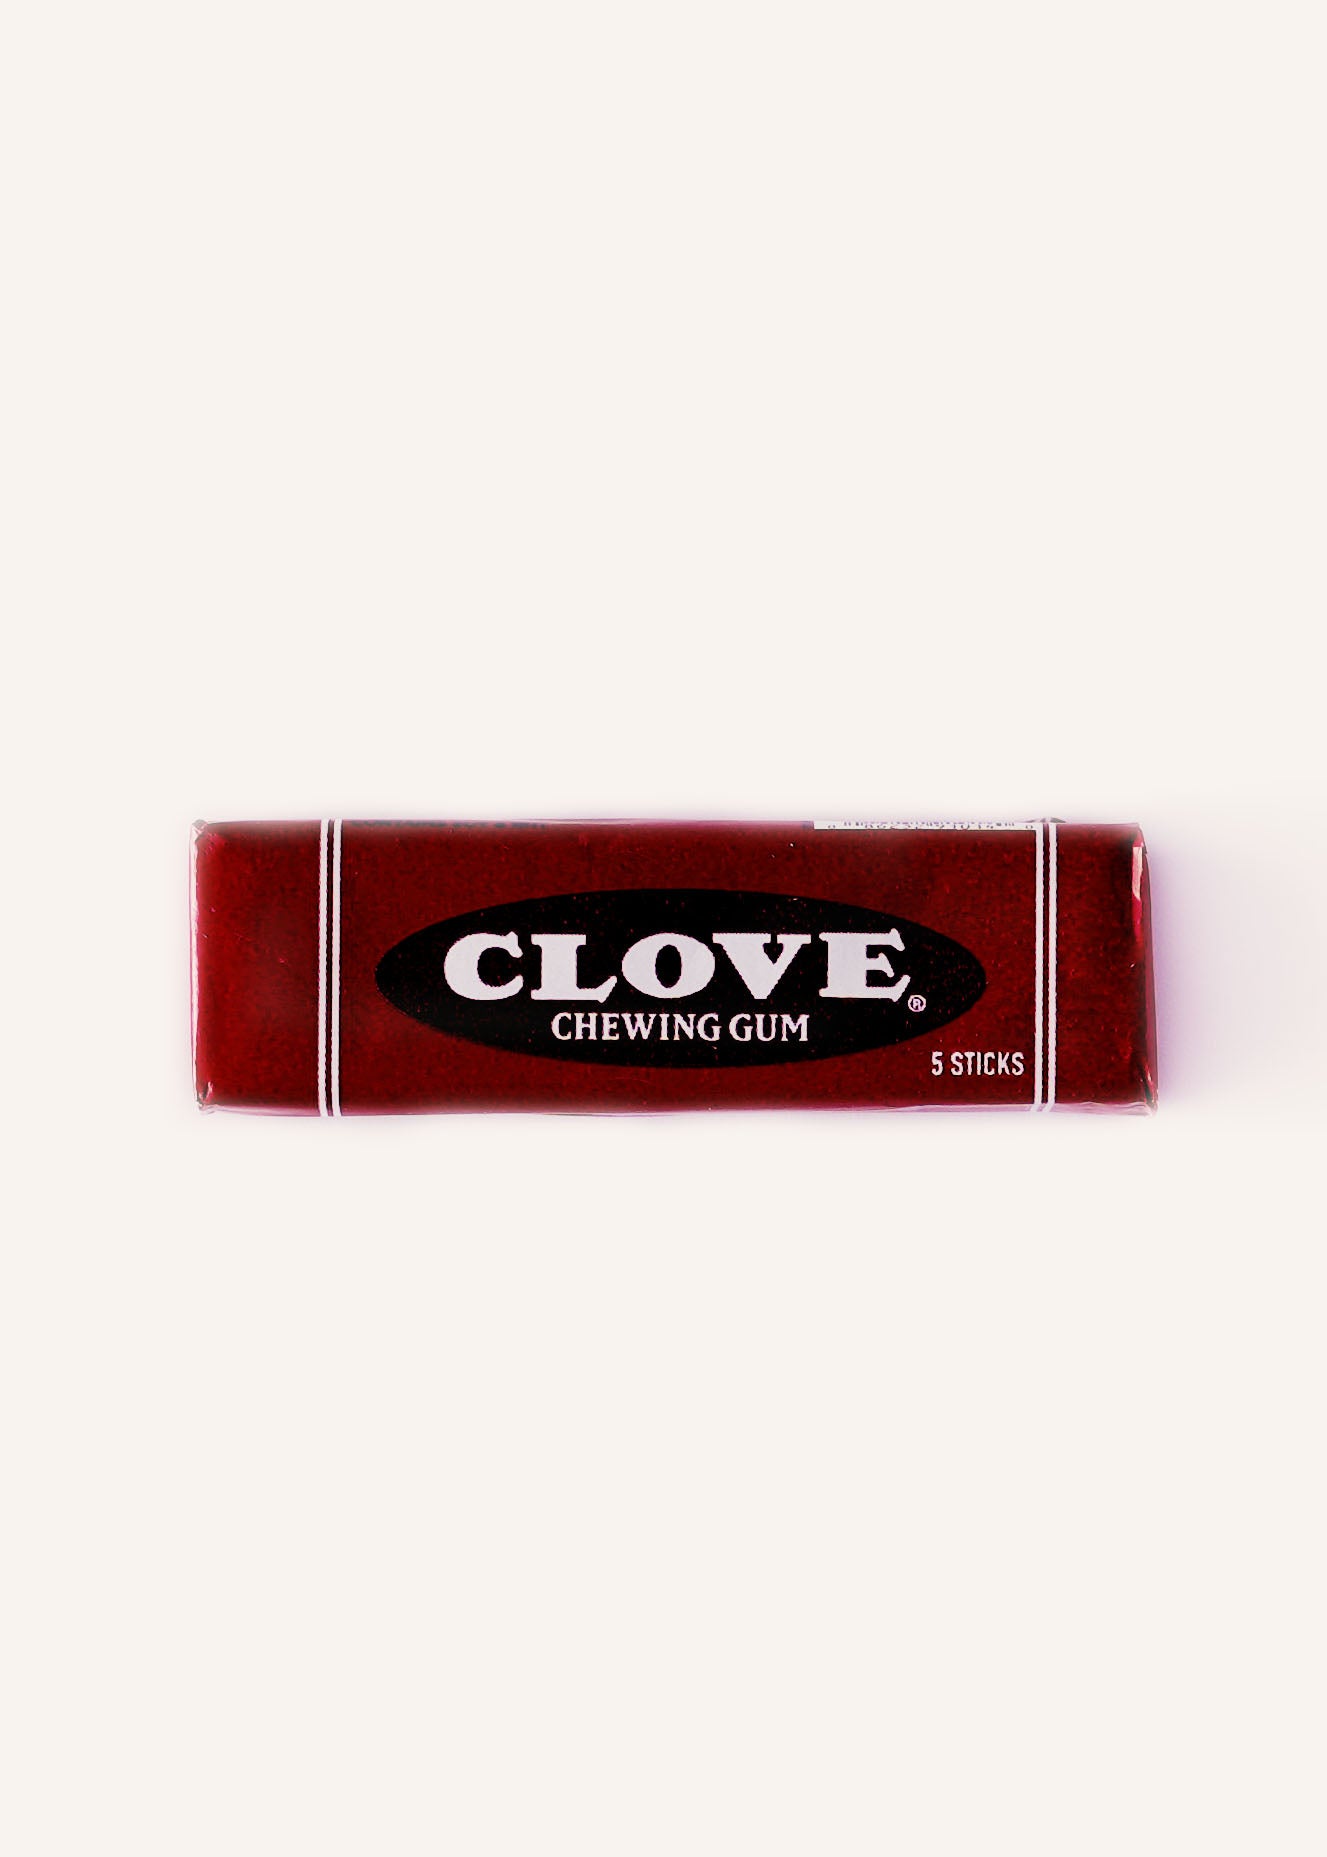 Clove Chewing Gum